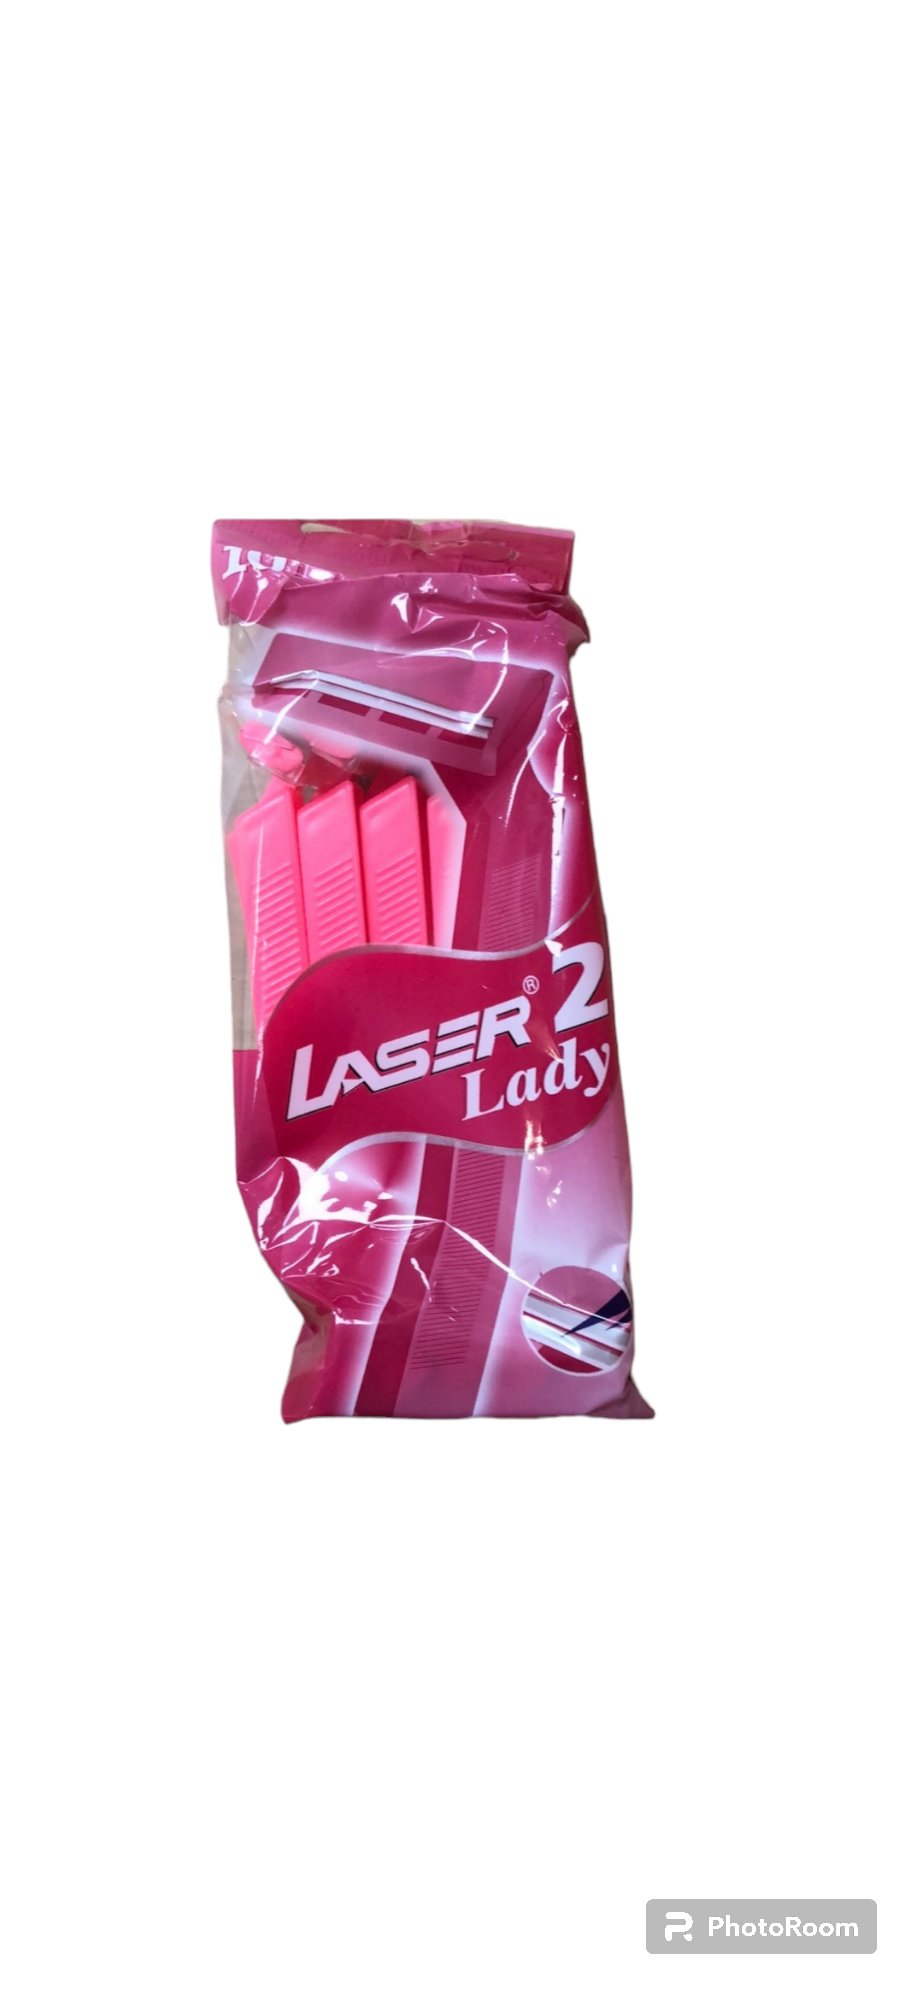 Laser 2 lady razors 10 pack